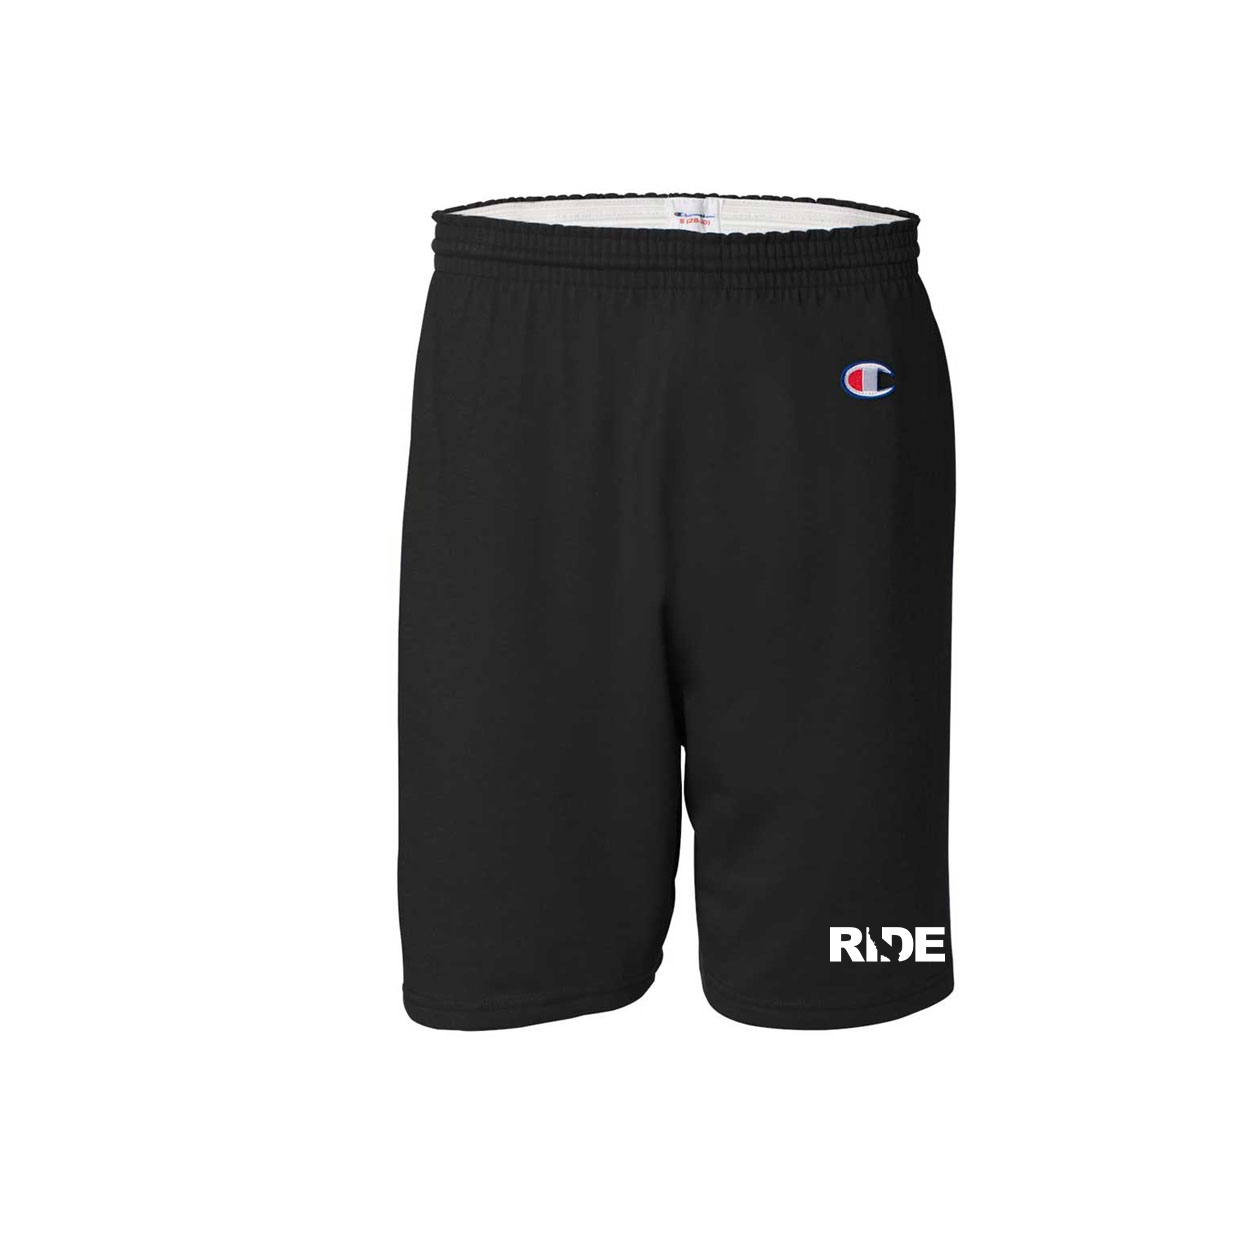 Ride California Classic Men's Unisex Gym Shorts Black with Pockets Black (White Logo)